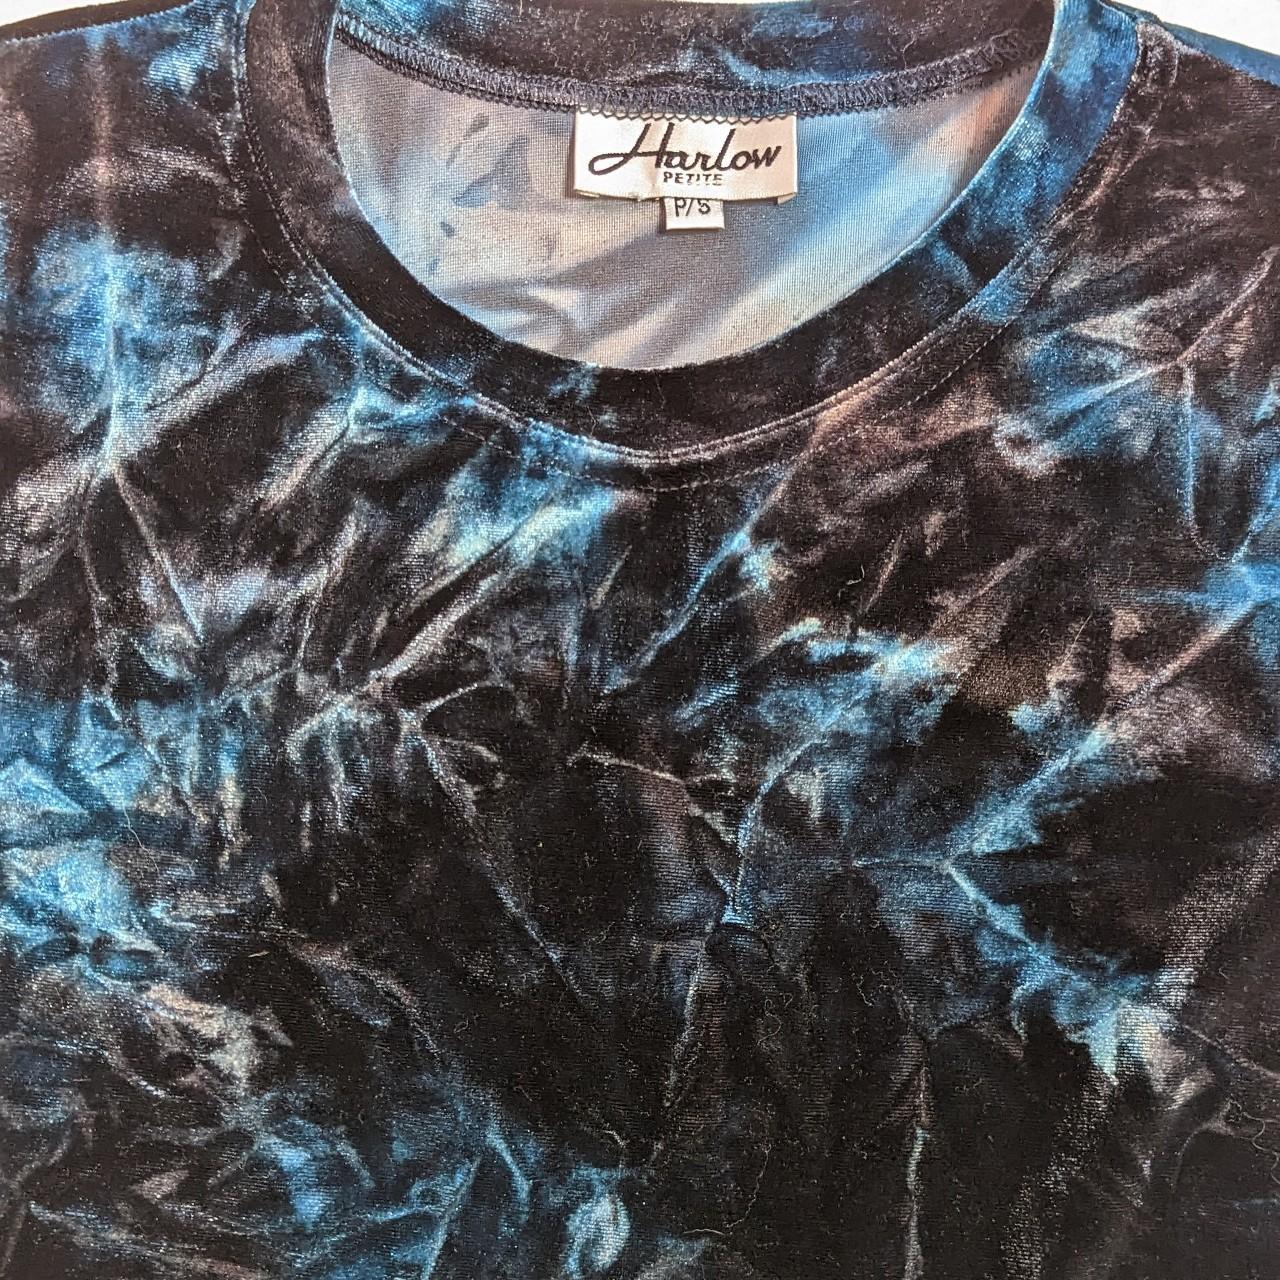 PJ Harlow Women's Black and Blue T-shirt (2)